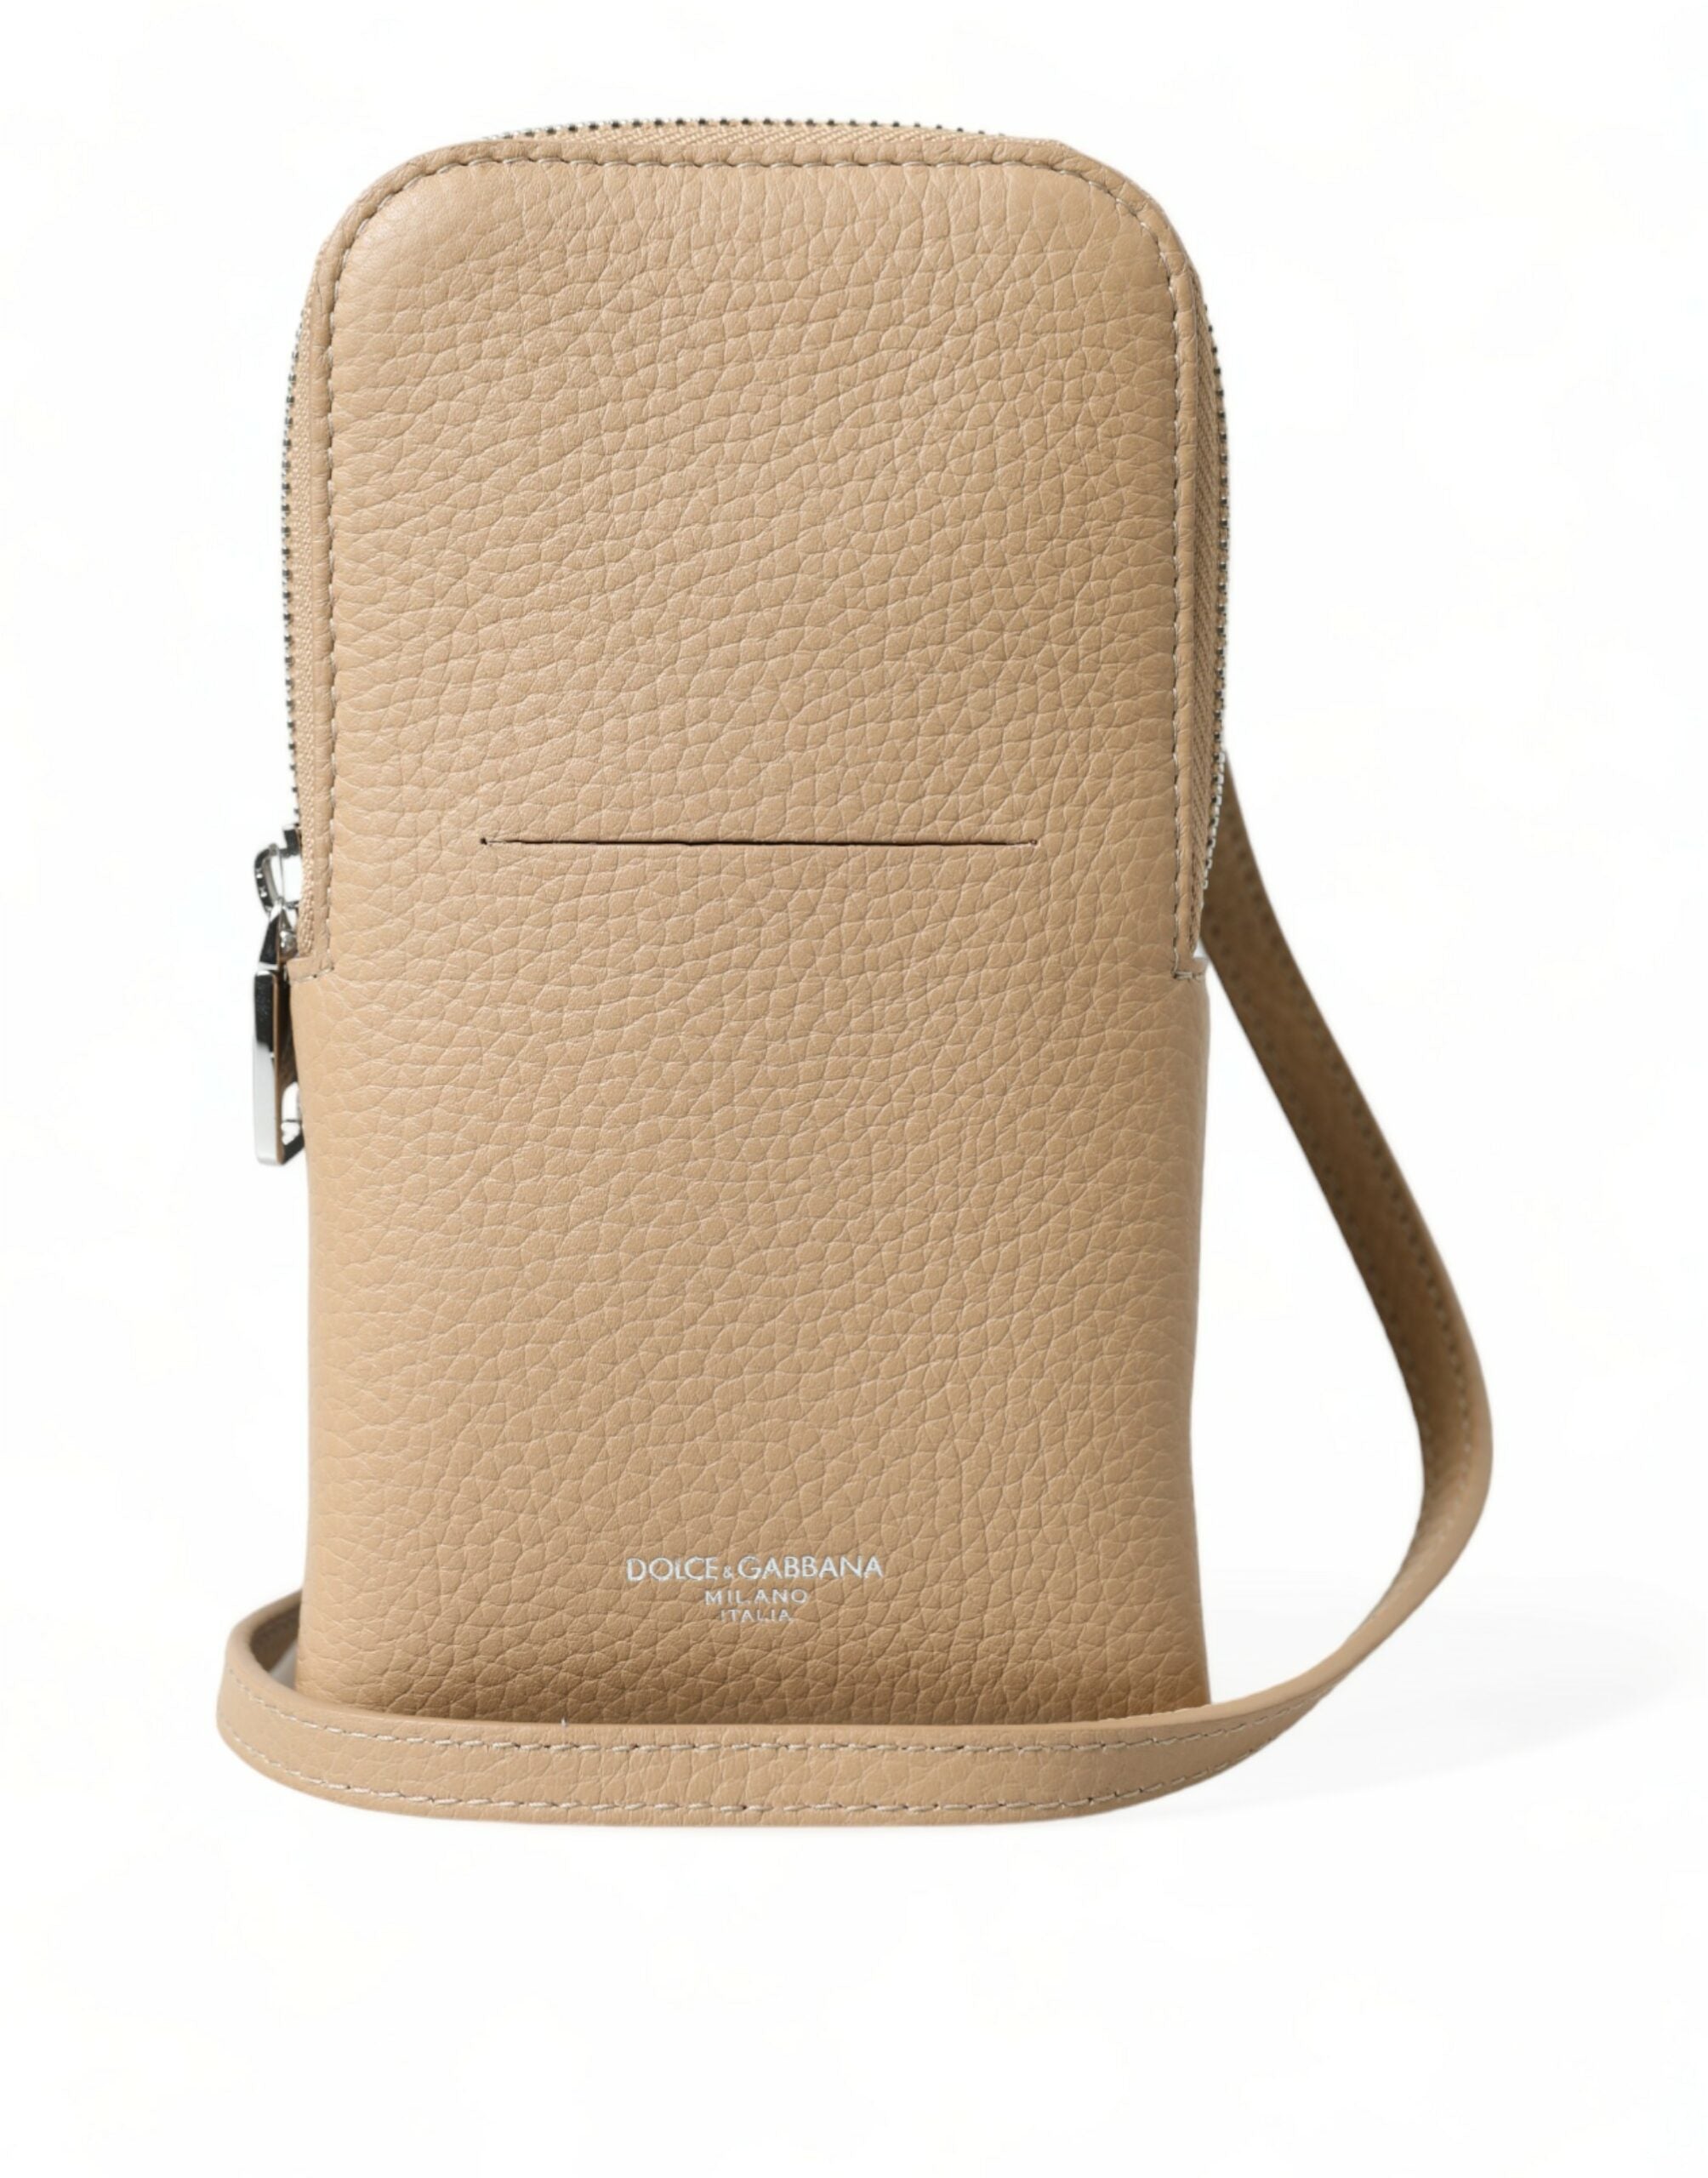 Dolce & Gabbana Chic Beige Leather Crossbody Phone Bag